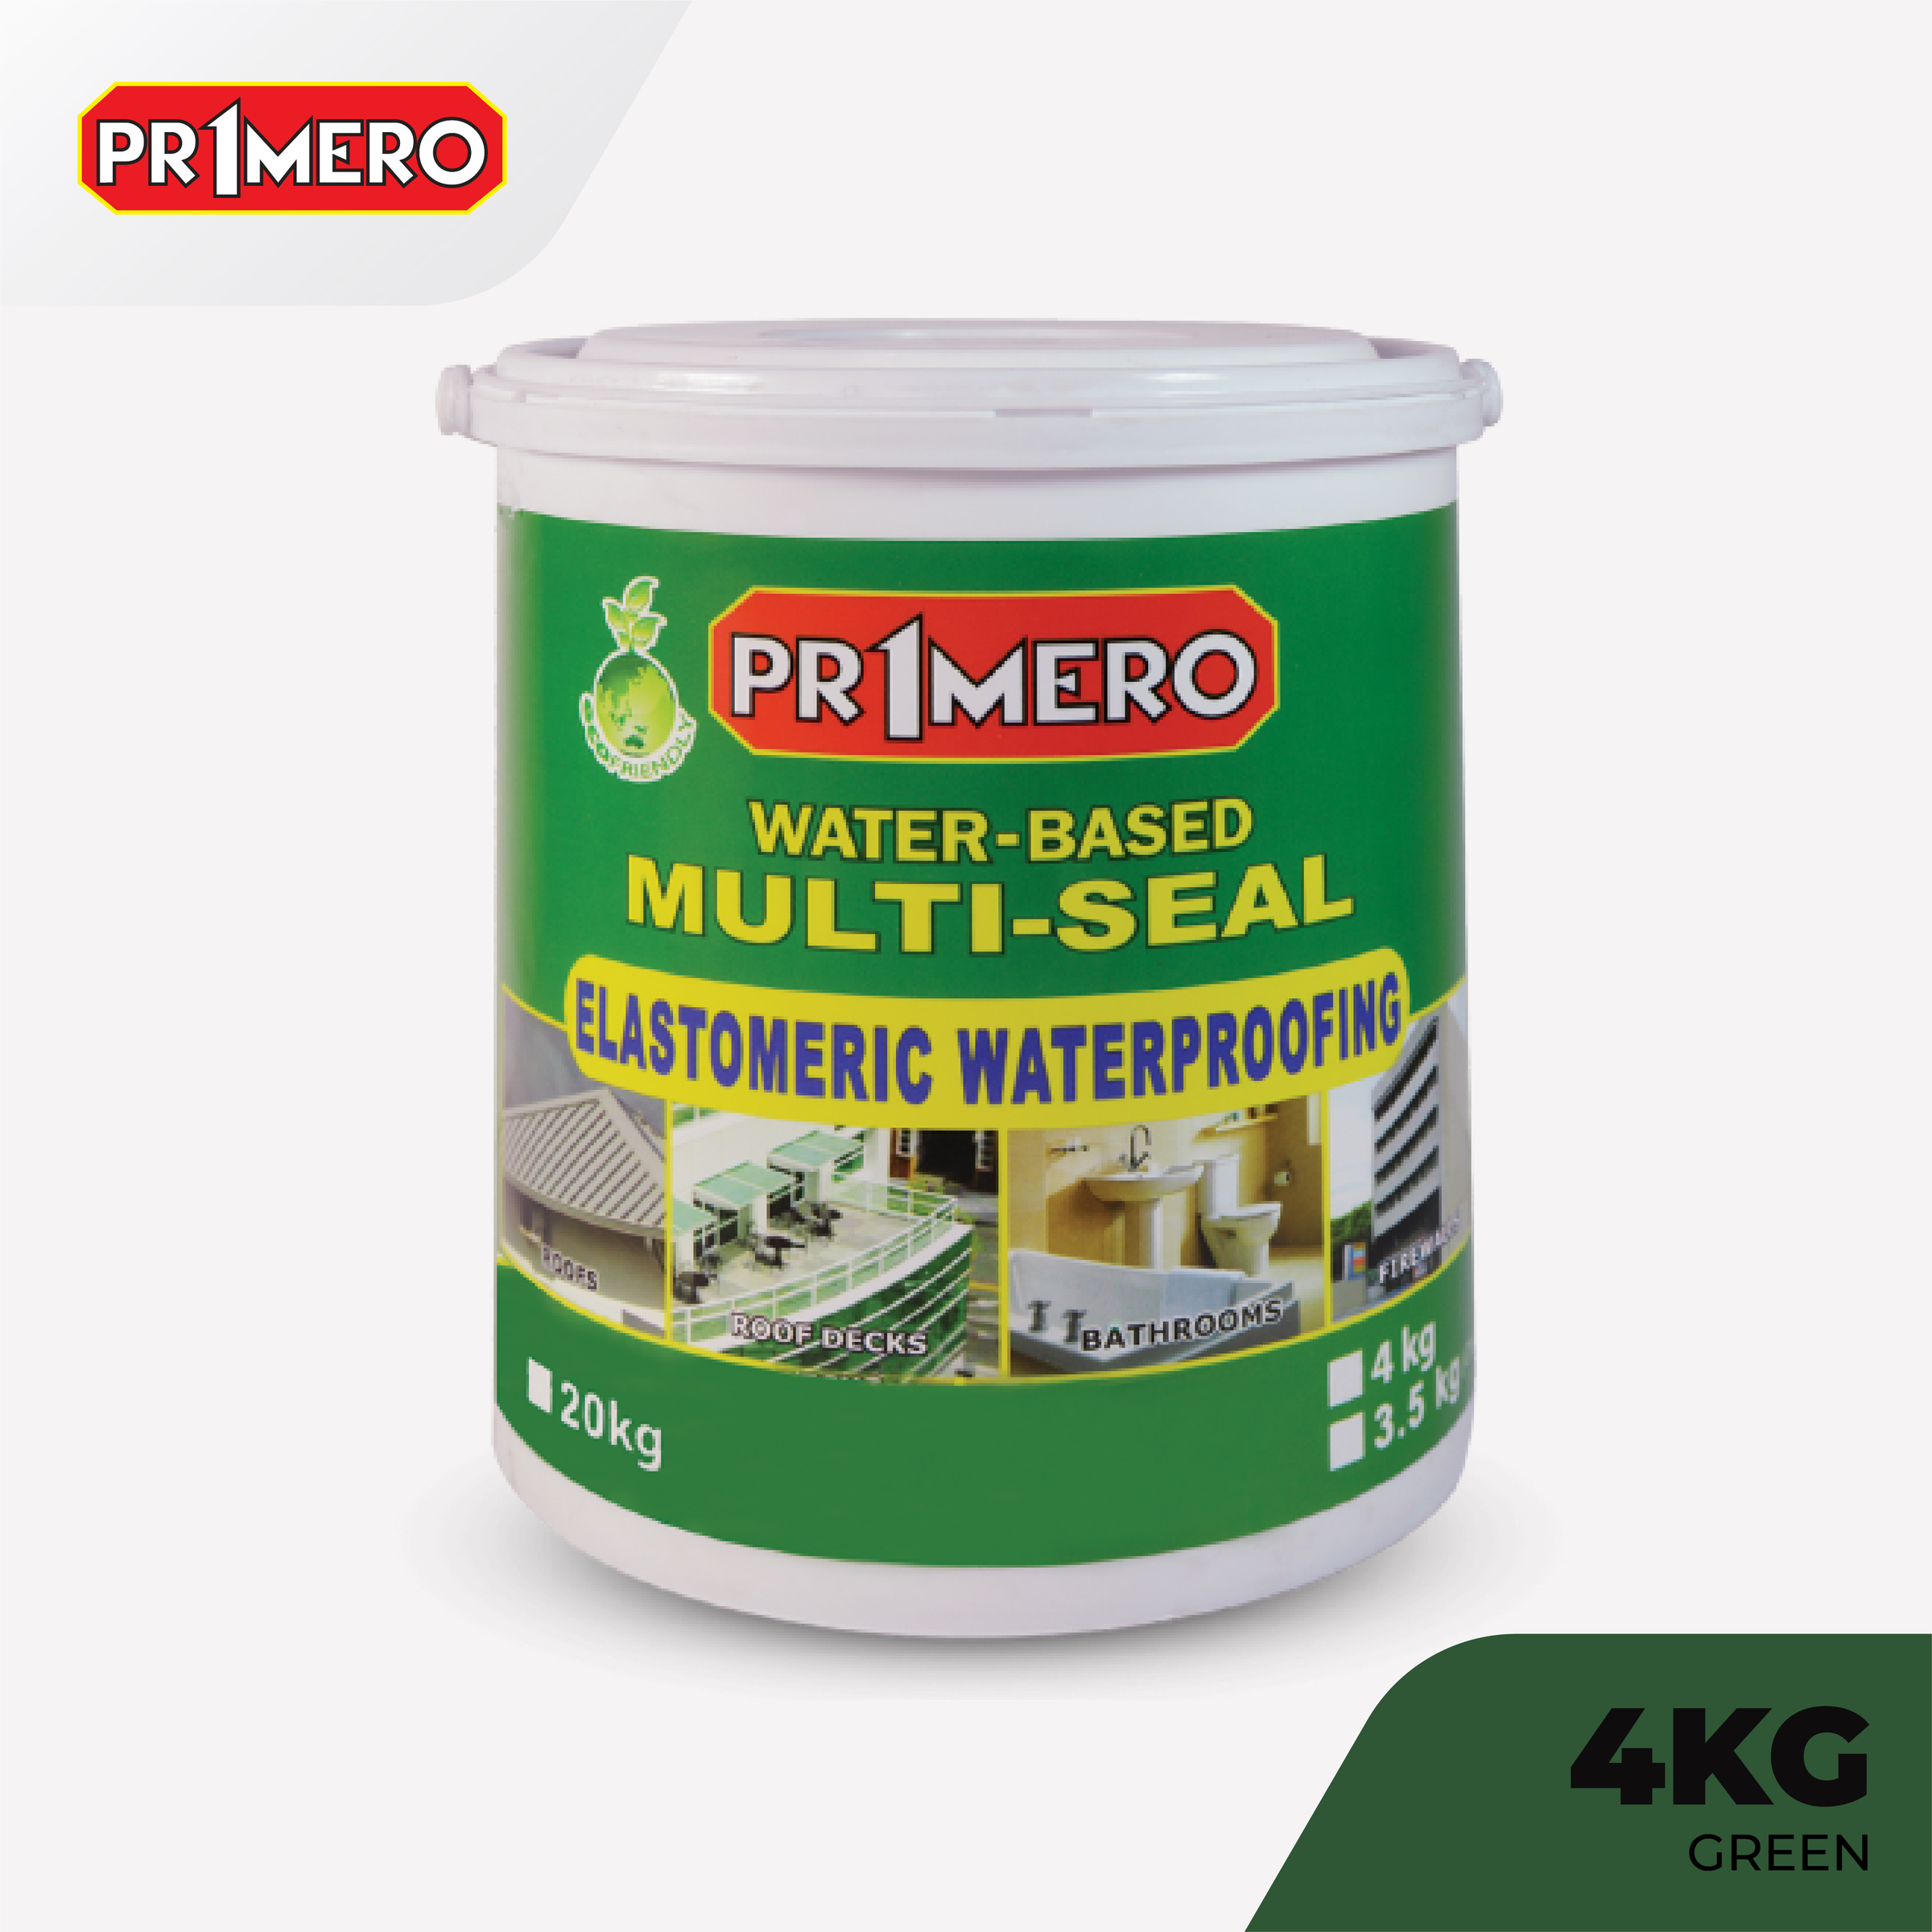 Primero Multi-Seal Elastomeric Waterproofing Sealant Green - 4Kg